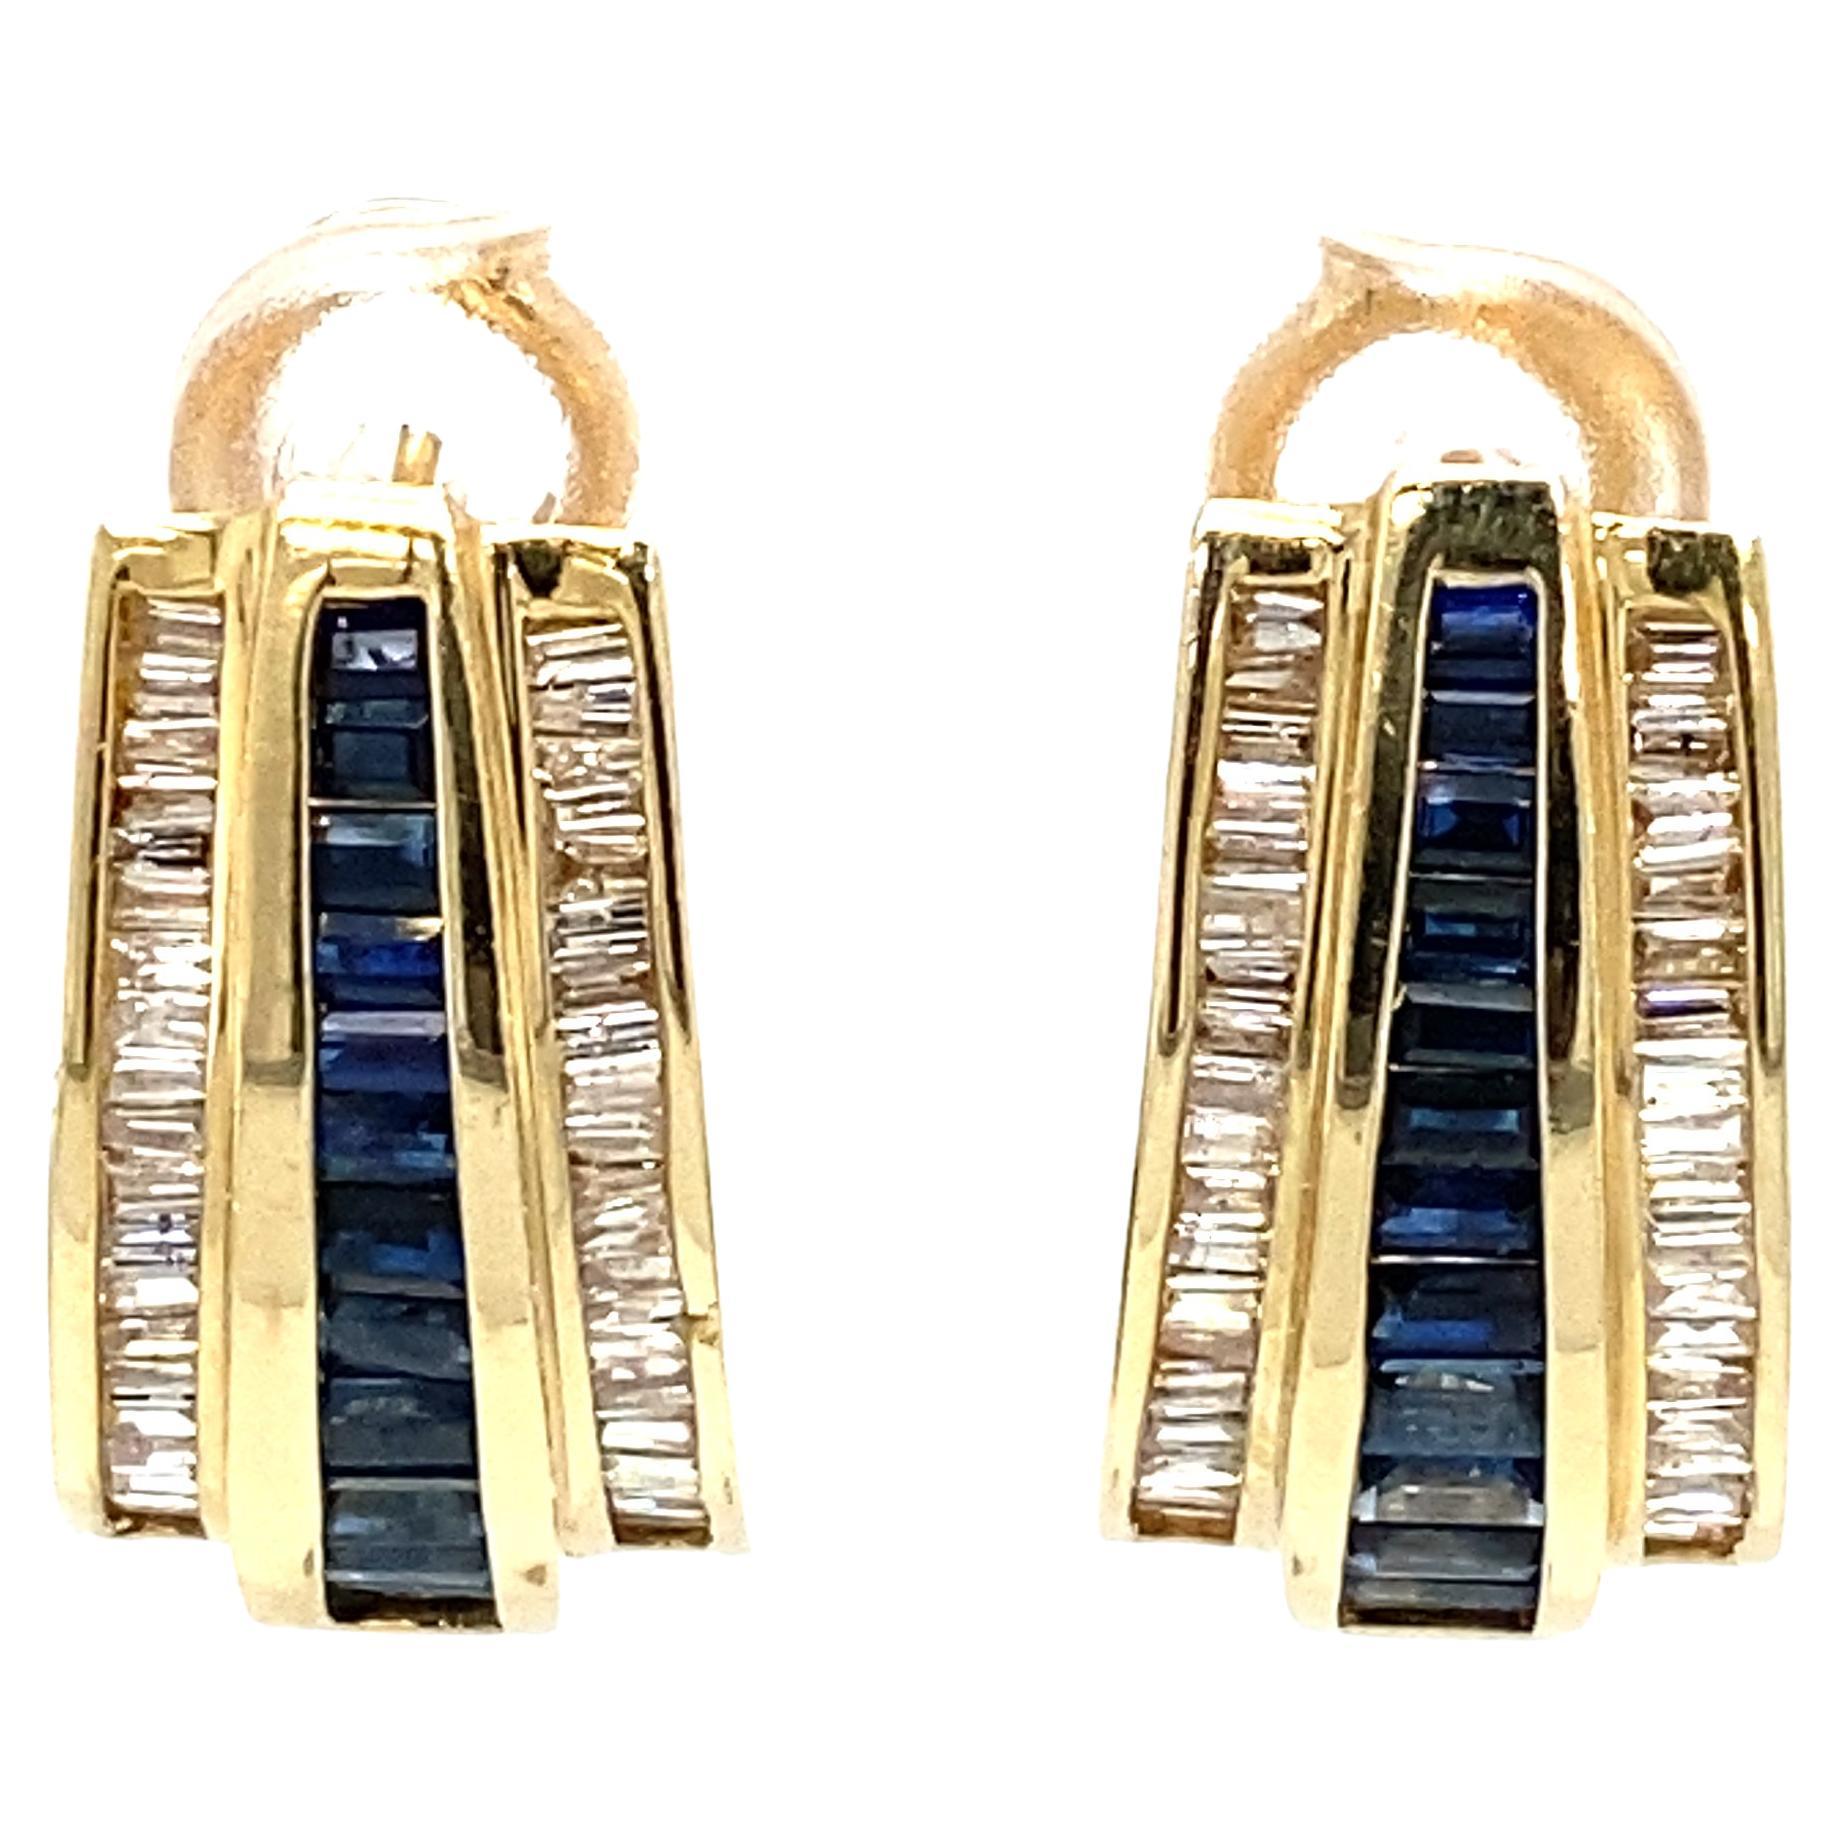 Circa 1950s Baguette Sapphire and Diamond J Hoop Earrings in 14 Karat Gold